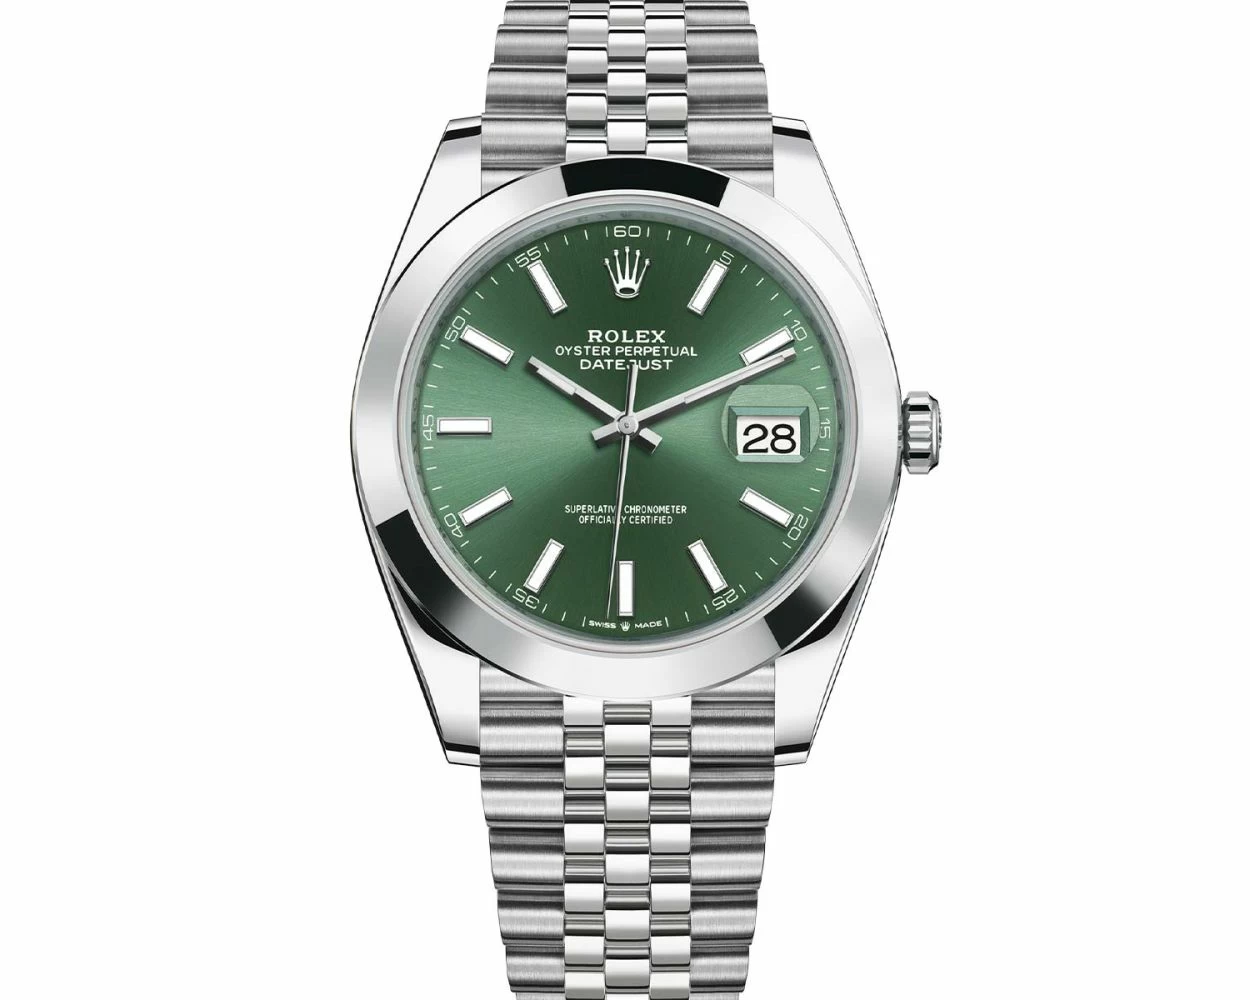 Datejust 41 green fluted motif or plain mint green dial? : r/rolex